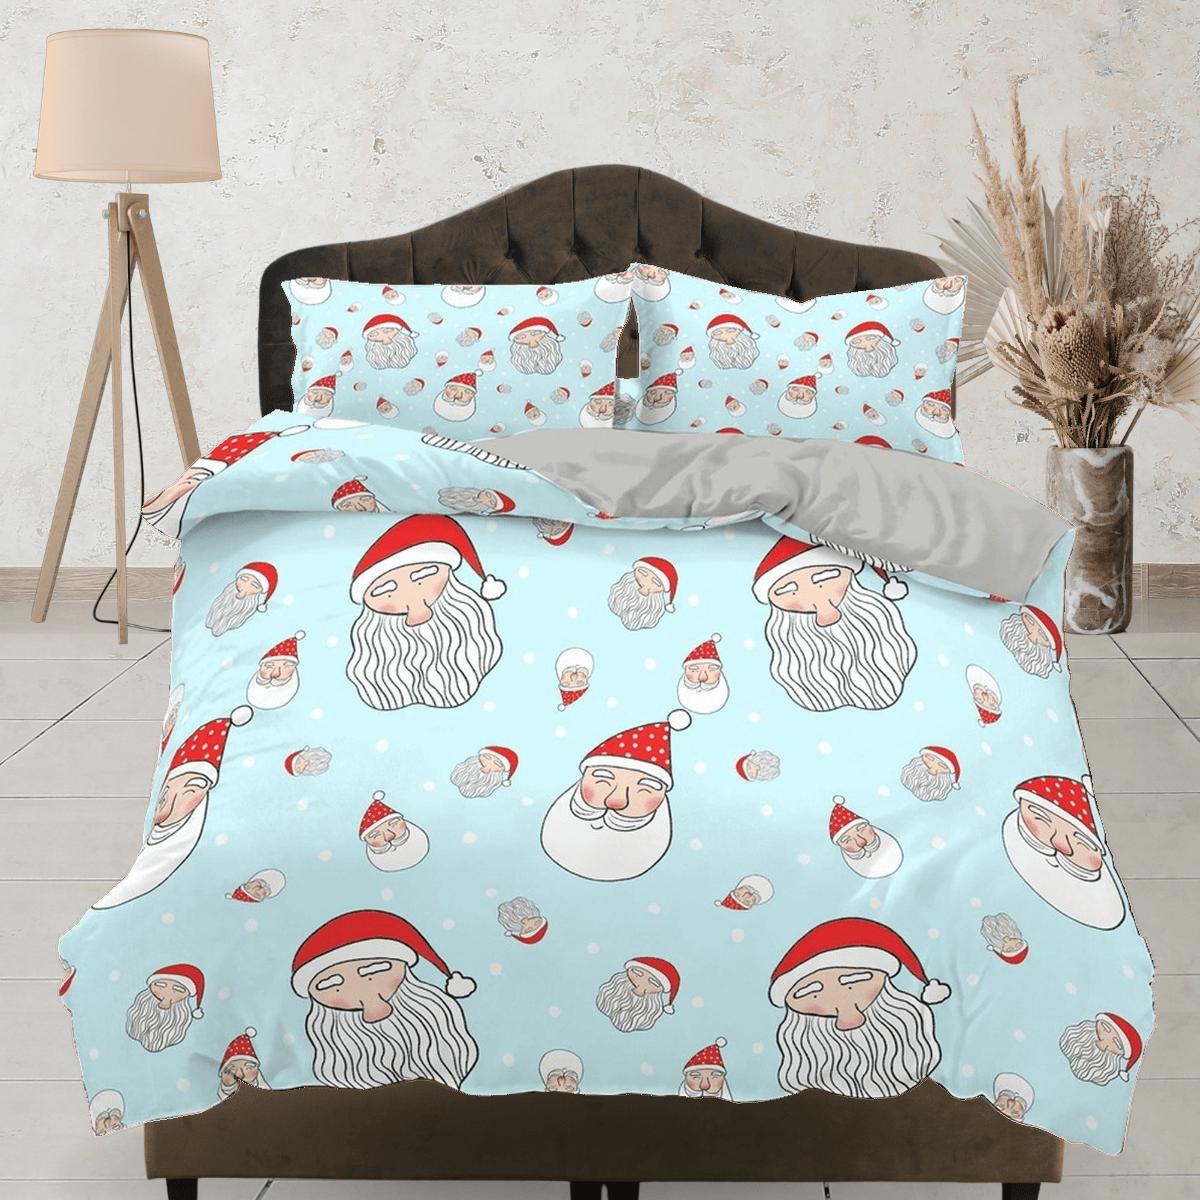 daintyduvet Santa Claus faces Christmas bedding holiday gift pillowcase duvet cover king queen full twin toddler bedding baby Christmas farmhouse decor